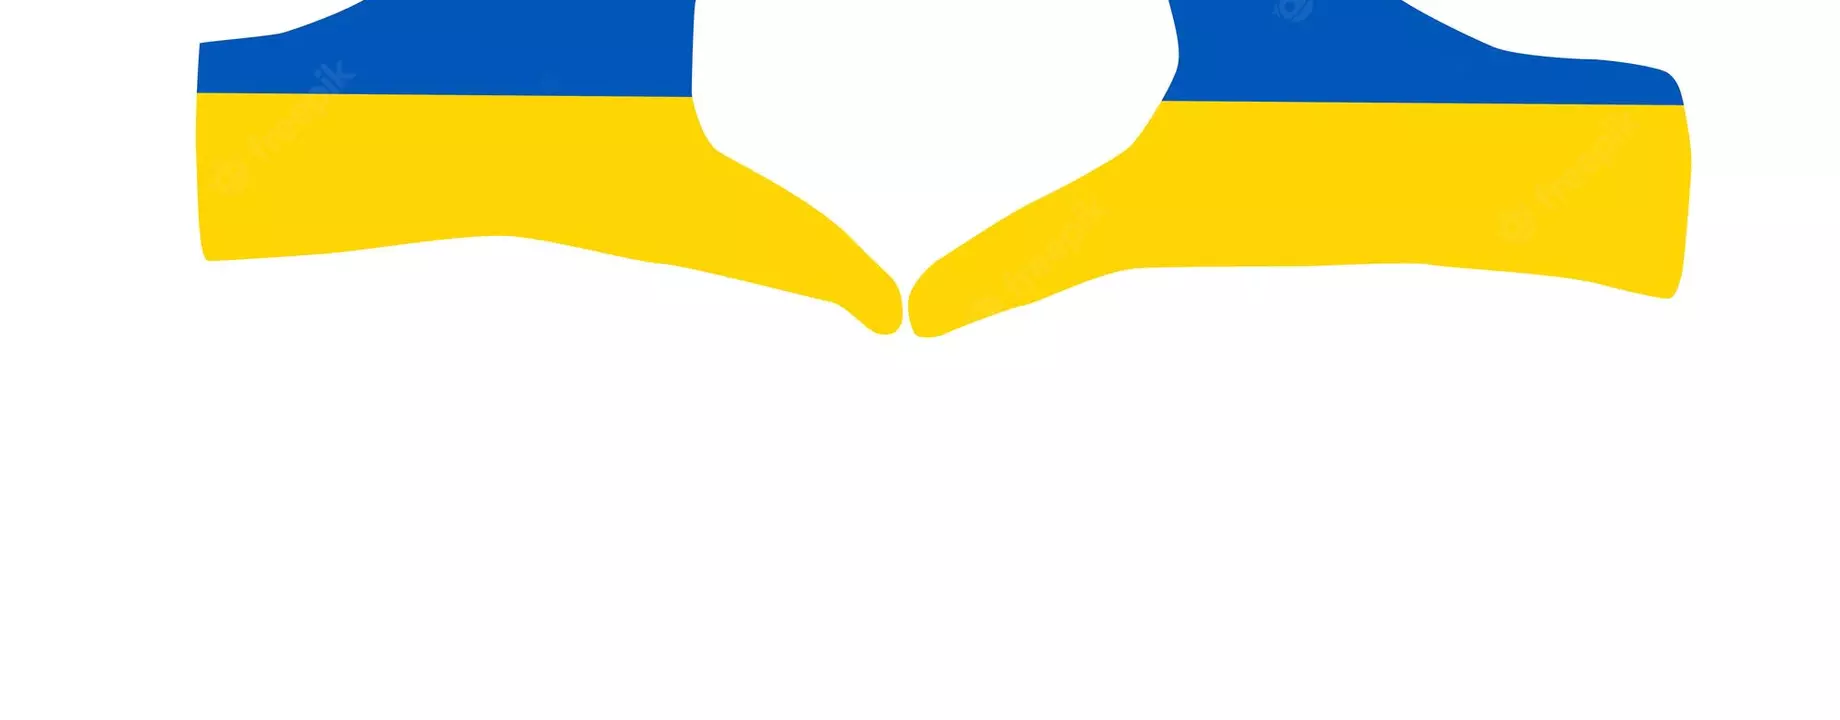 Ukraine heart with hand shape icon ukrainian flag blue yellow support logo design 497088 14